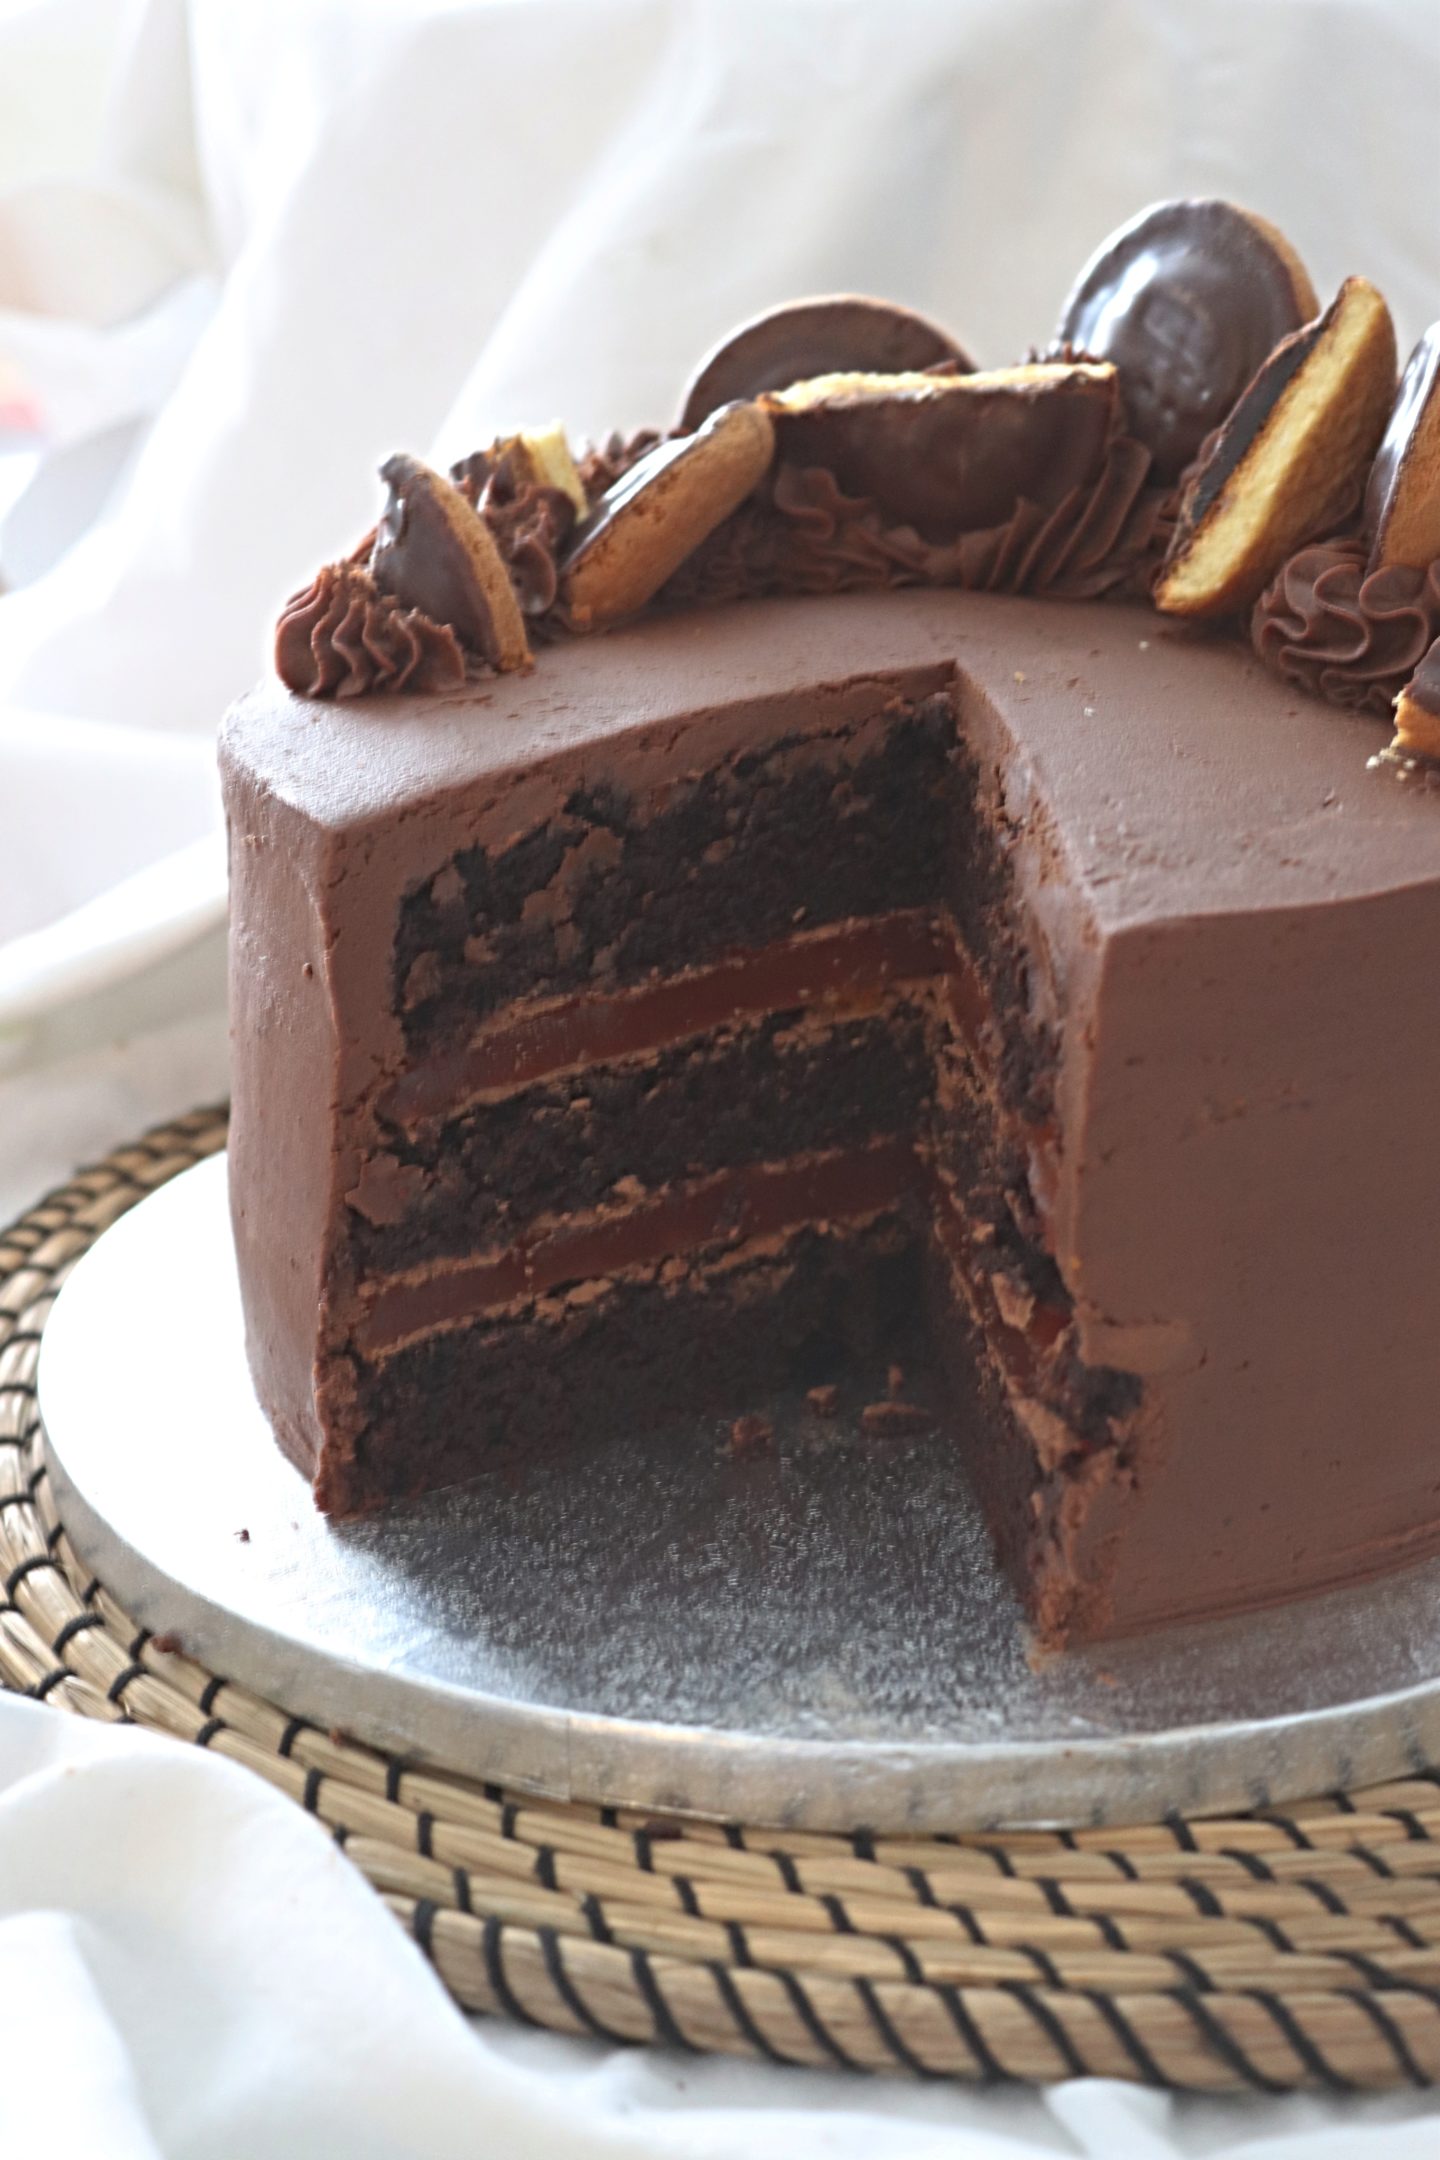 Jaffa Cake Cake - Makes, Bakes and Decor